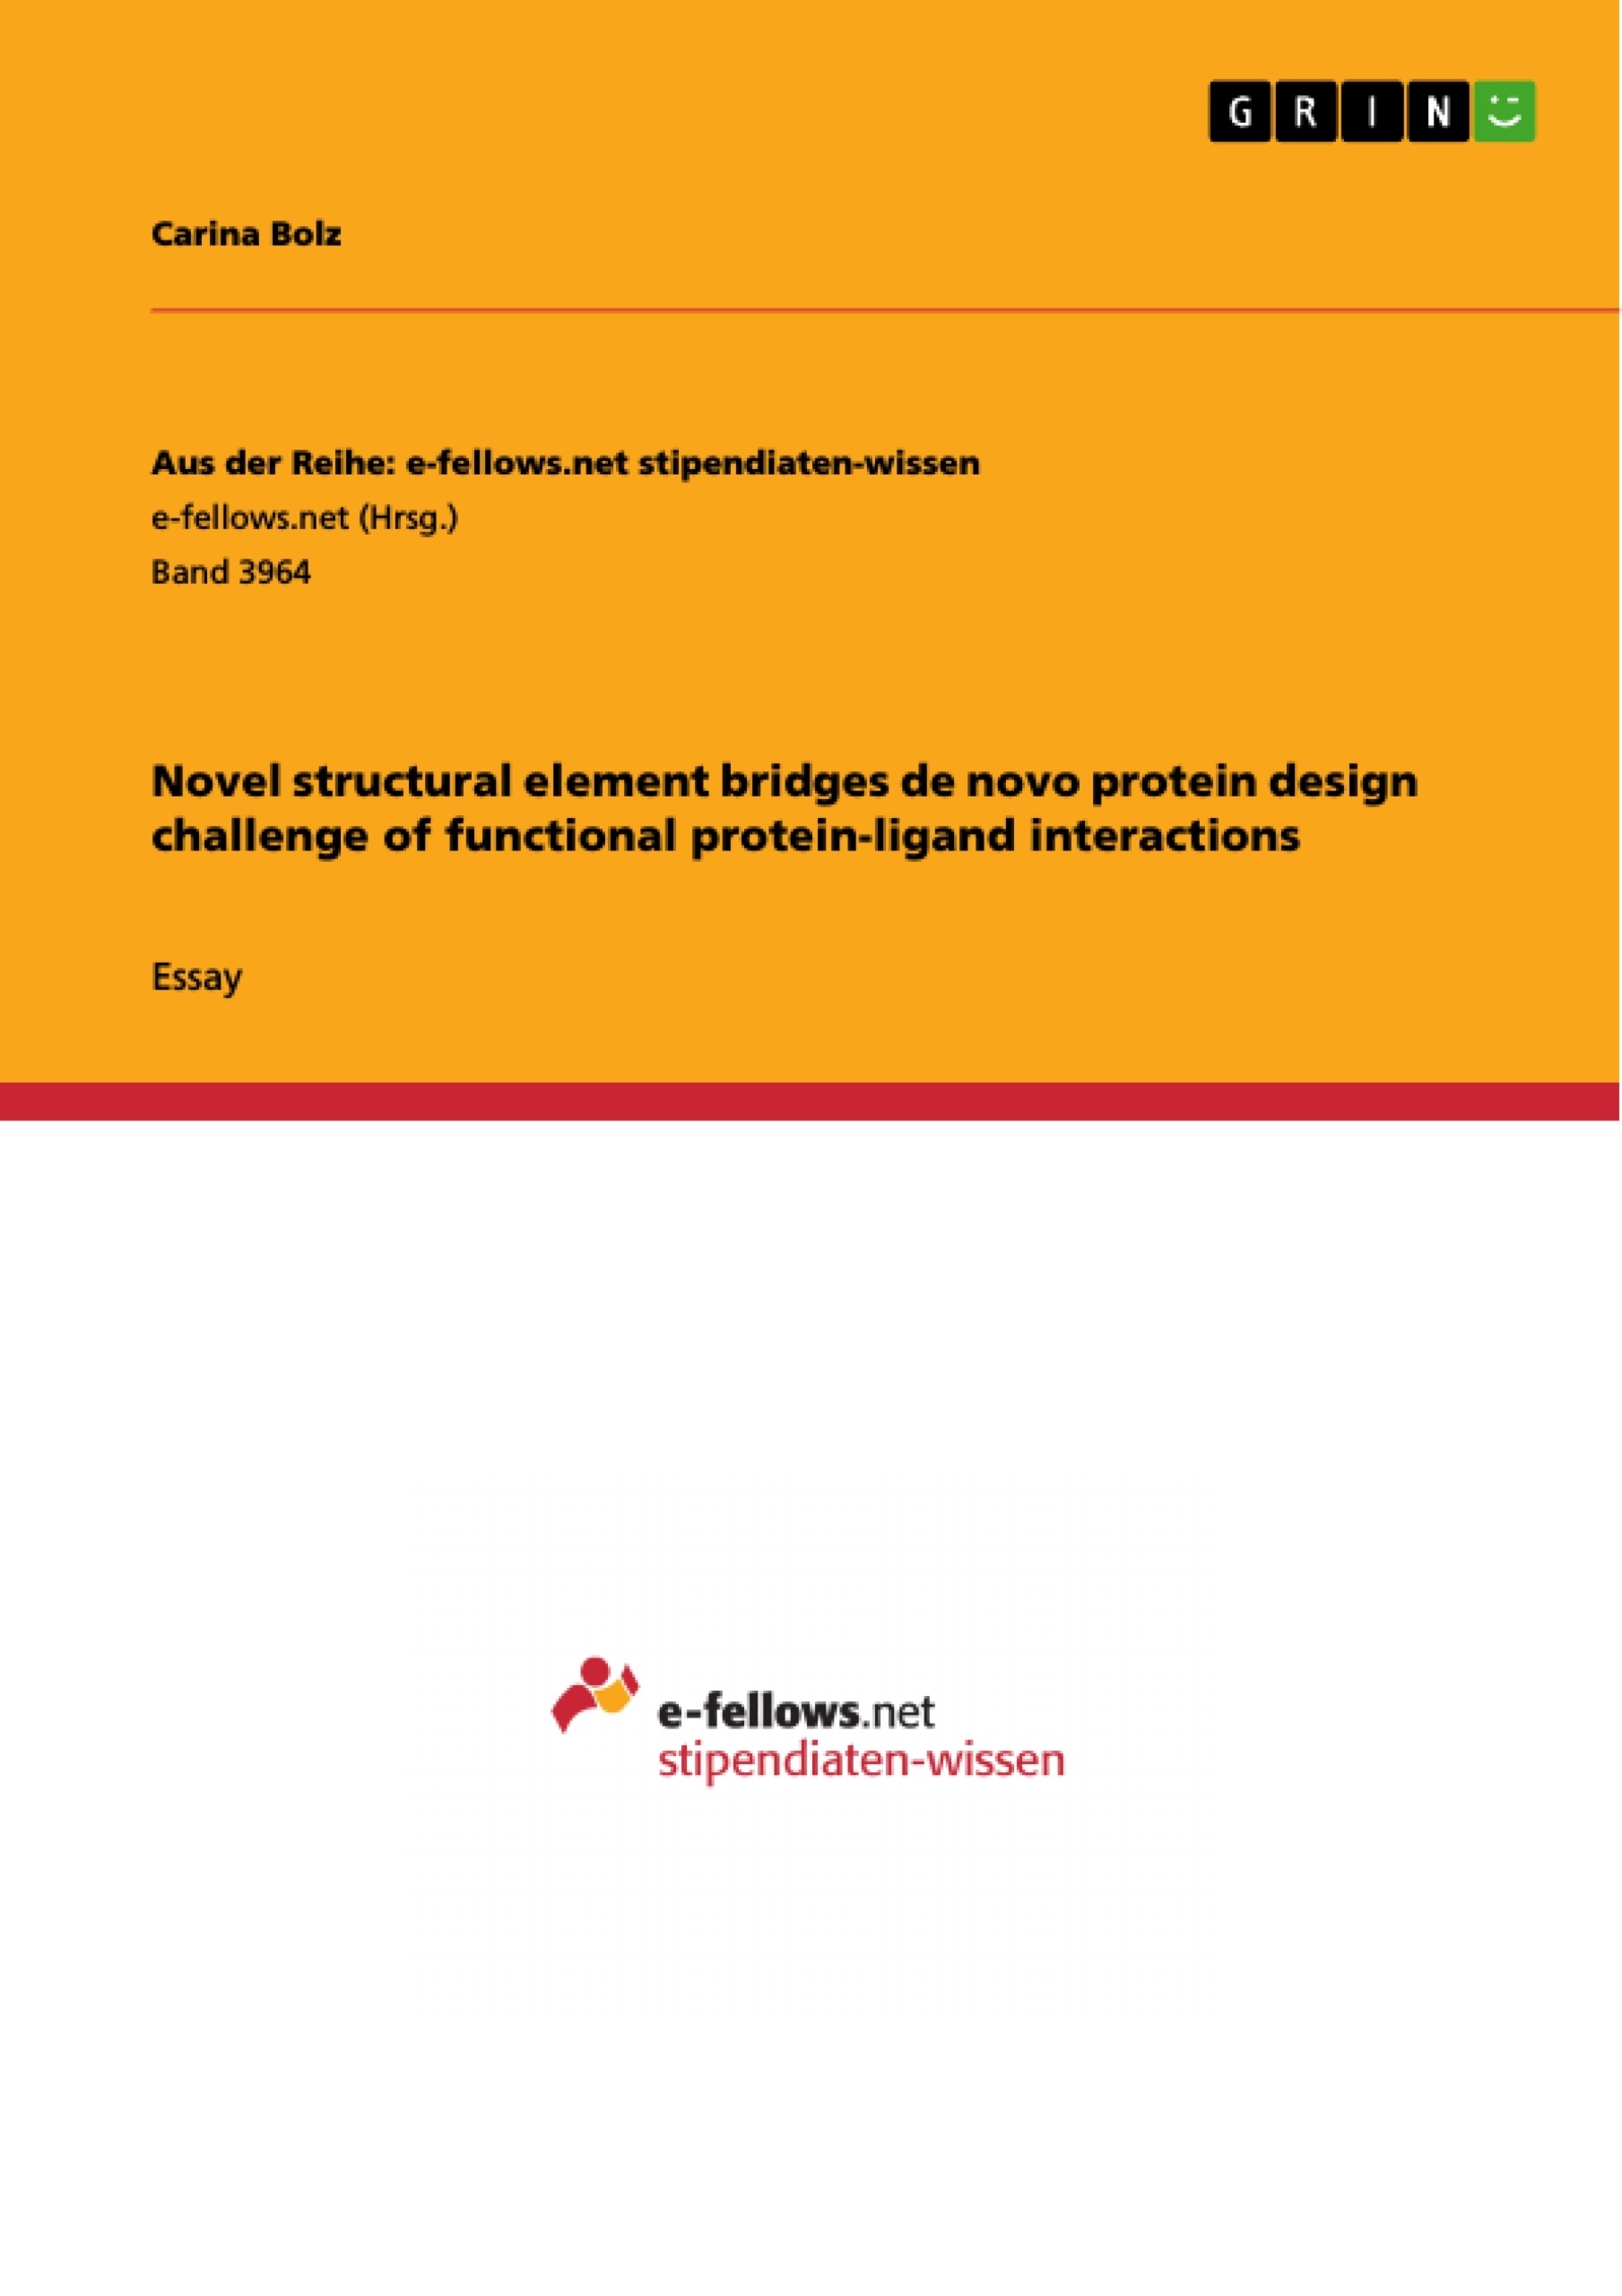 Title: Novel structural element bridges de novo protein design challenge of functional protein-ligand interactions